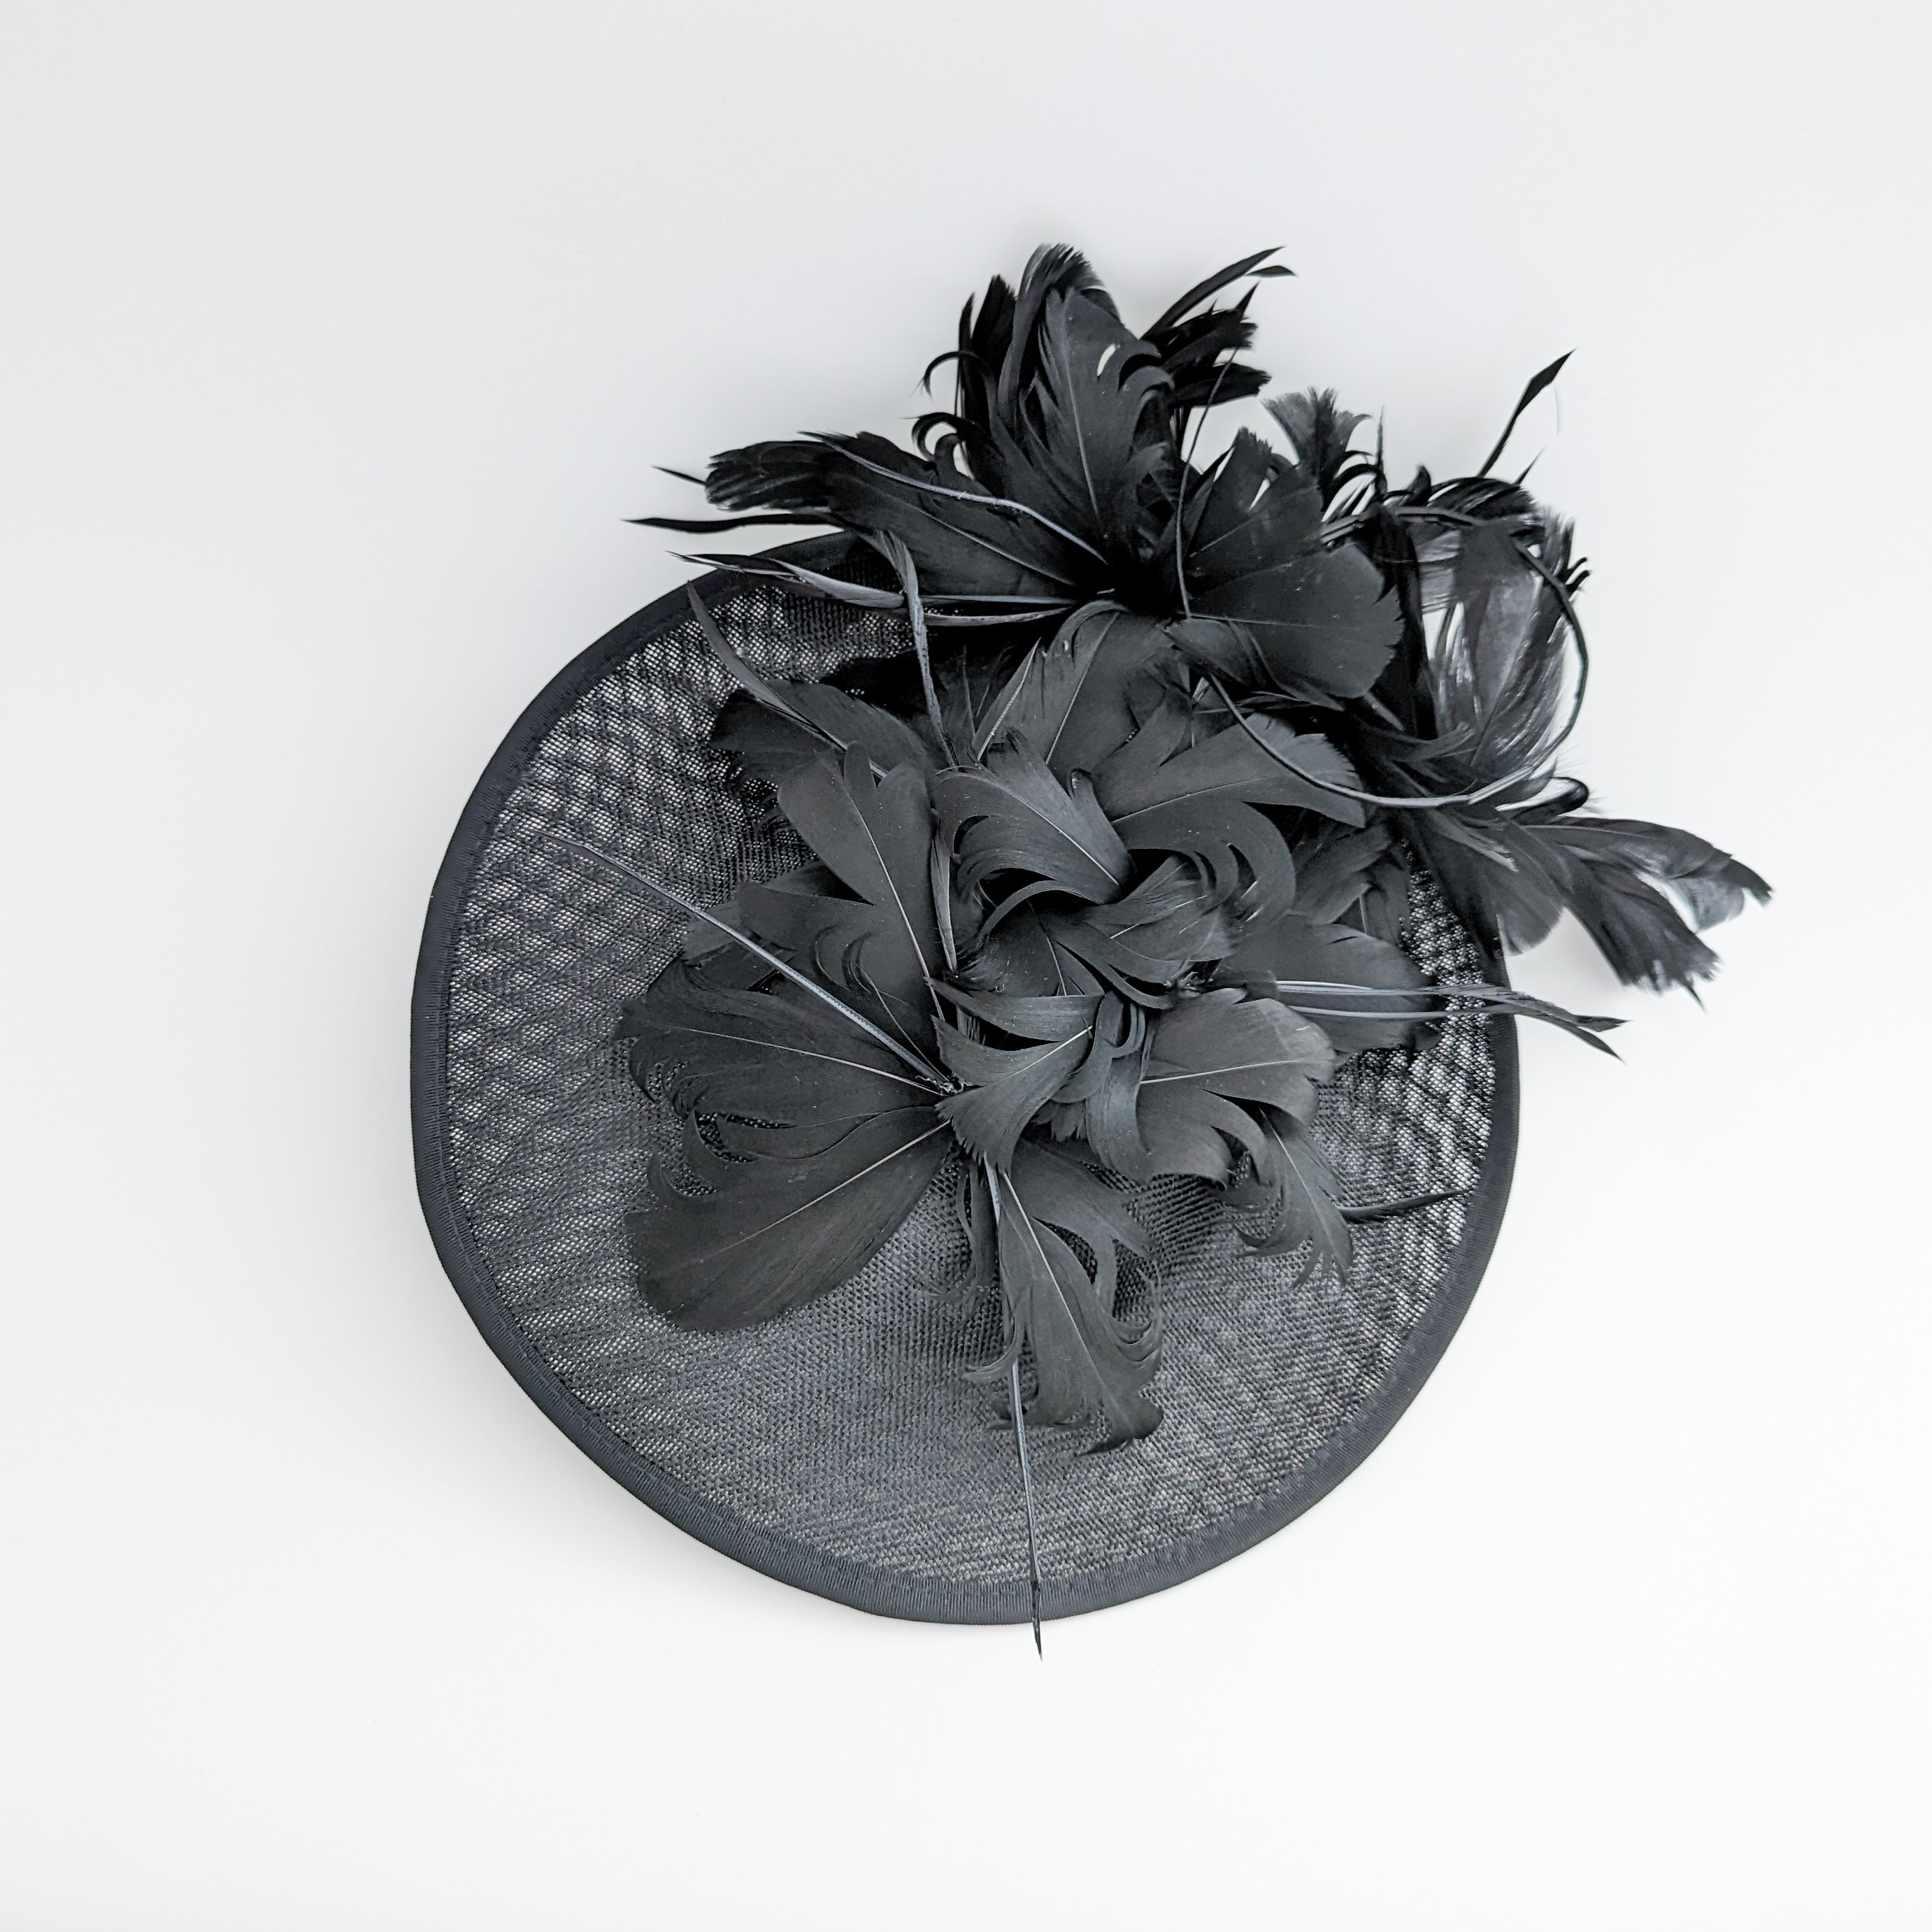 Black feather large saucer disc fascinator hat